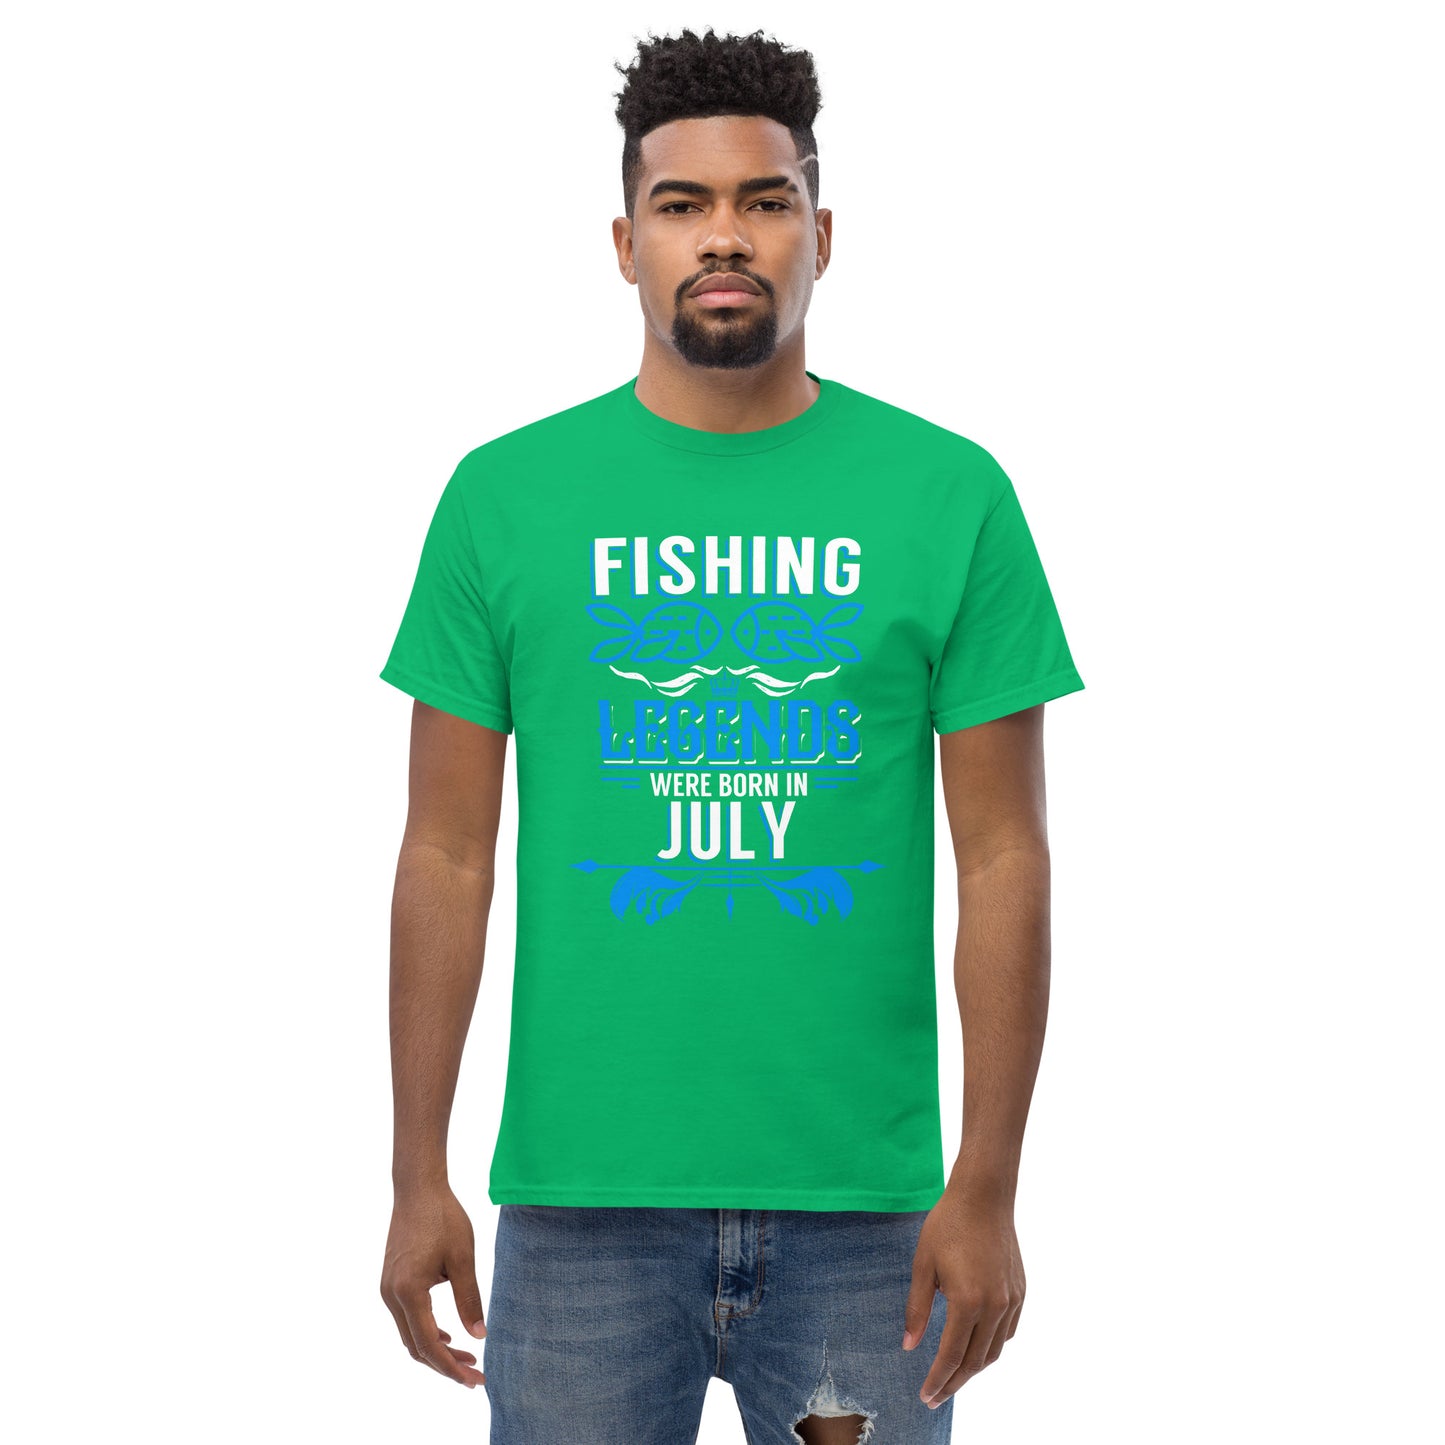 Fishing Legends Were Born In July T-Shirt